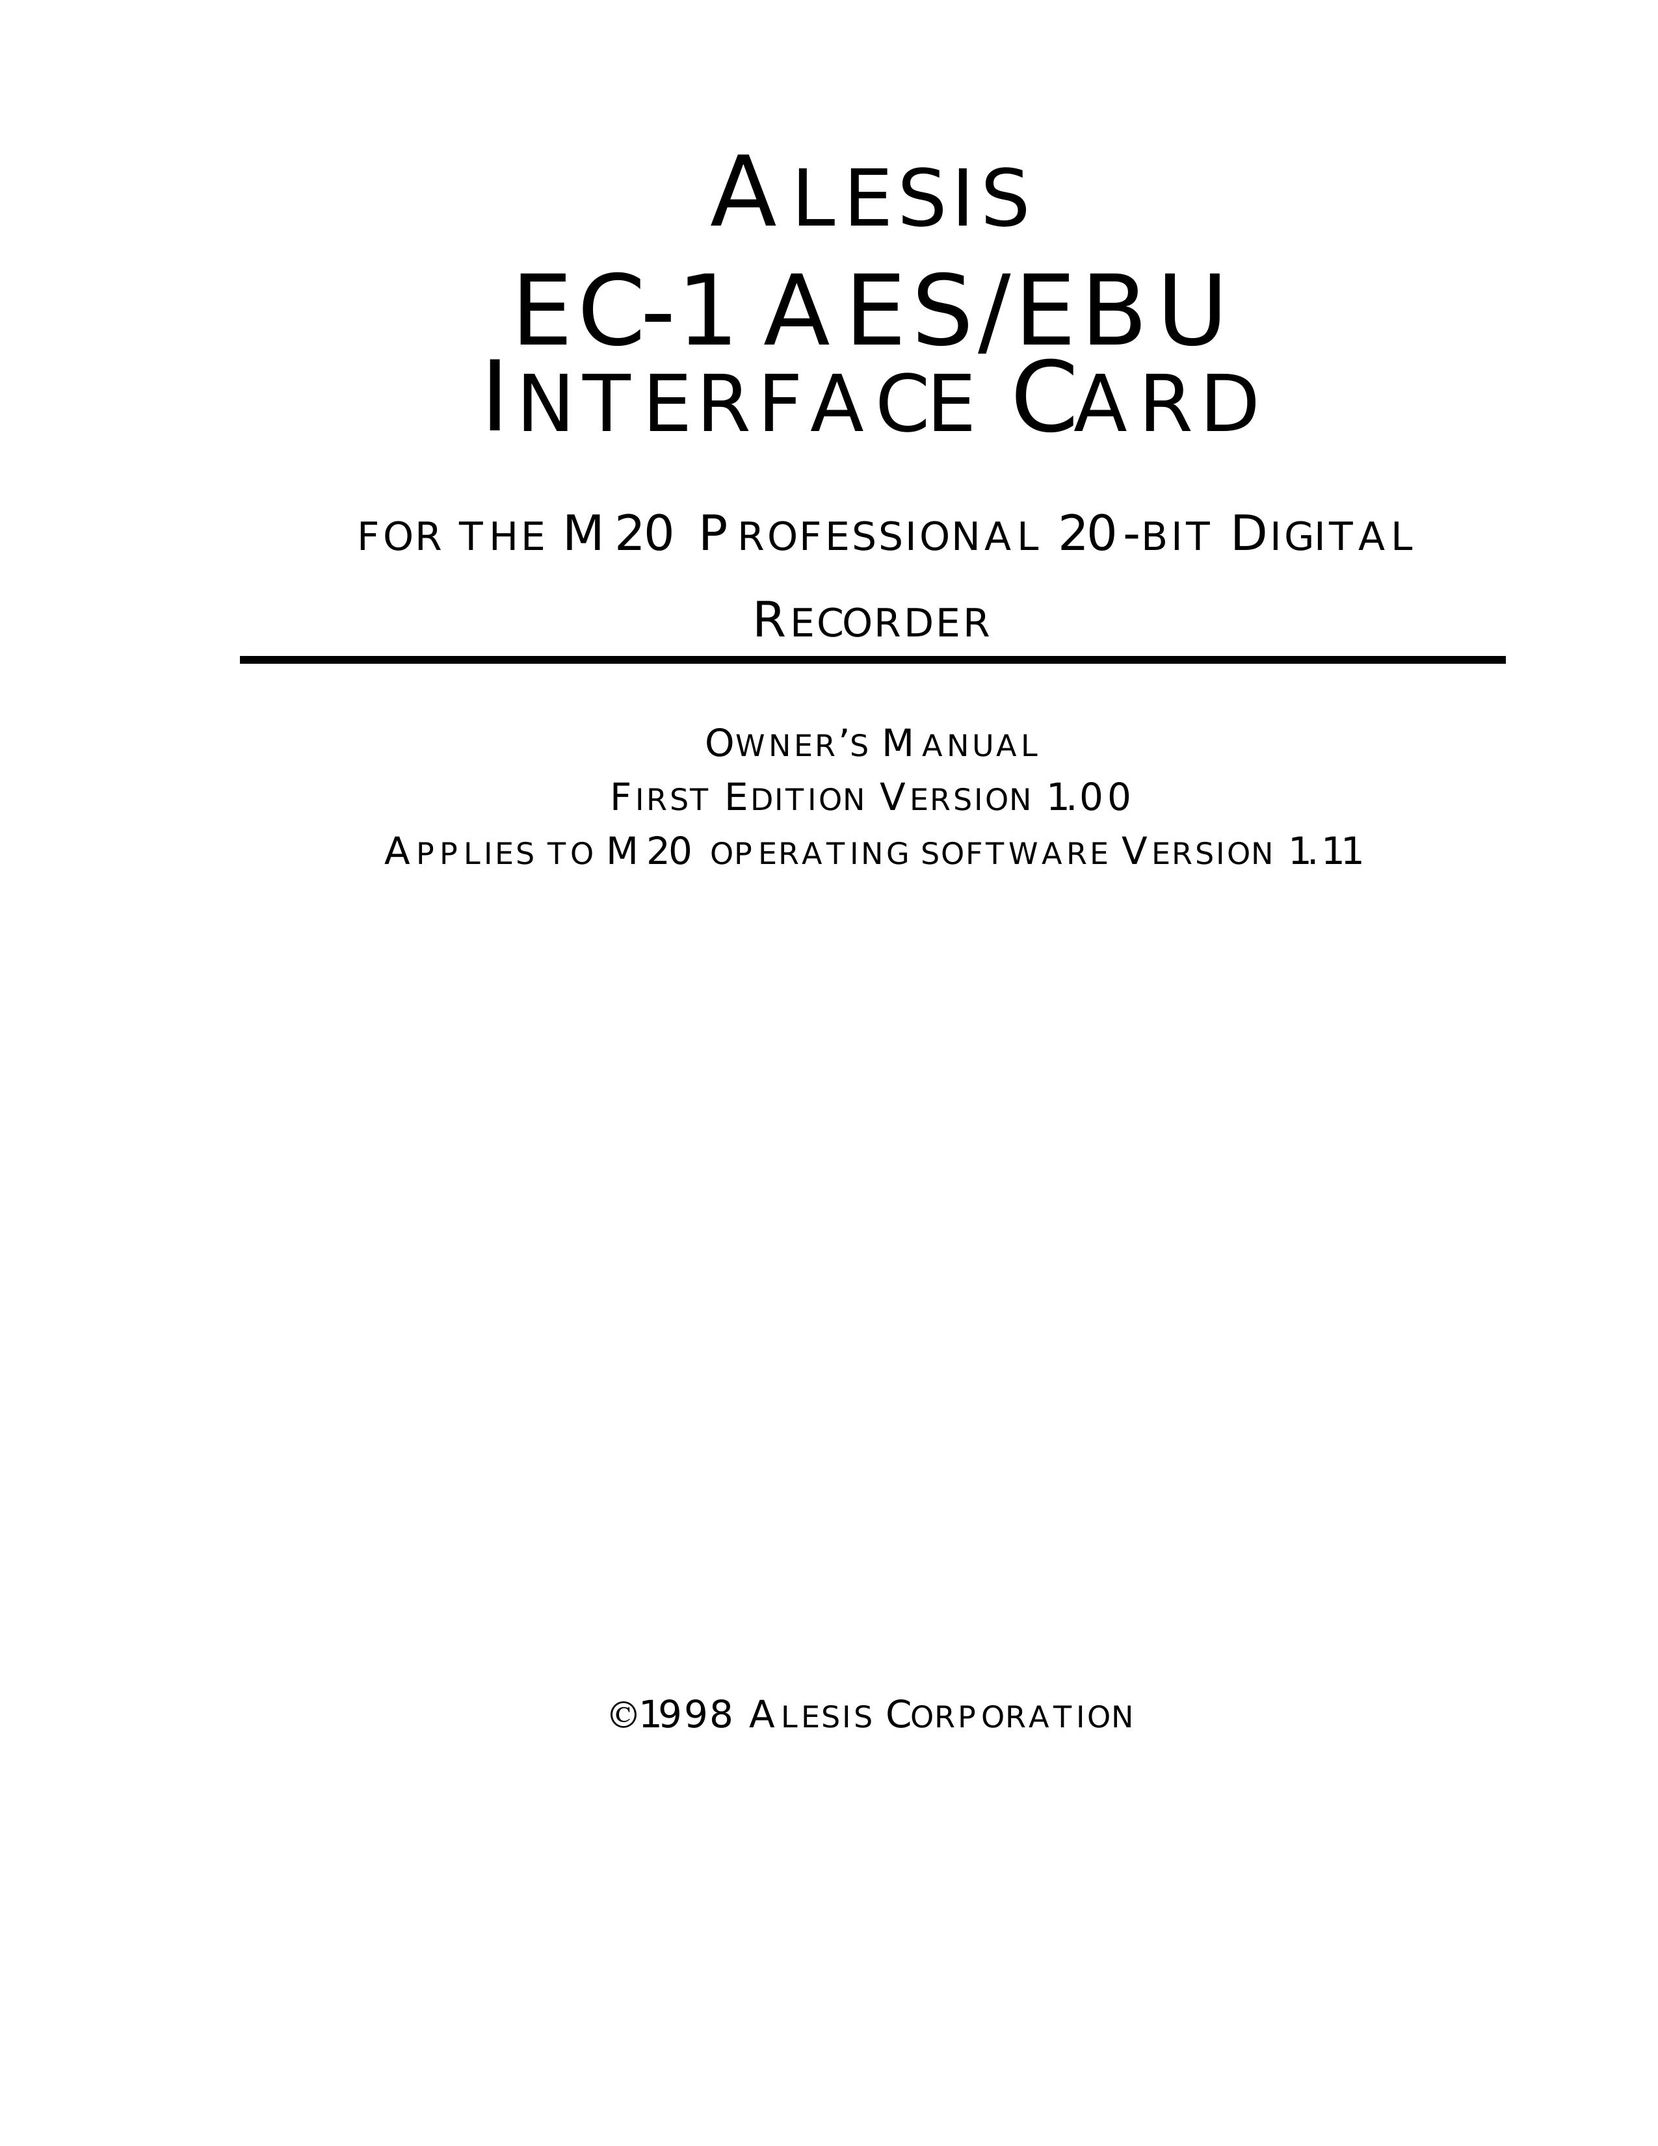 Alesis EC-1 A ES/EBU Network Card User Manual